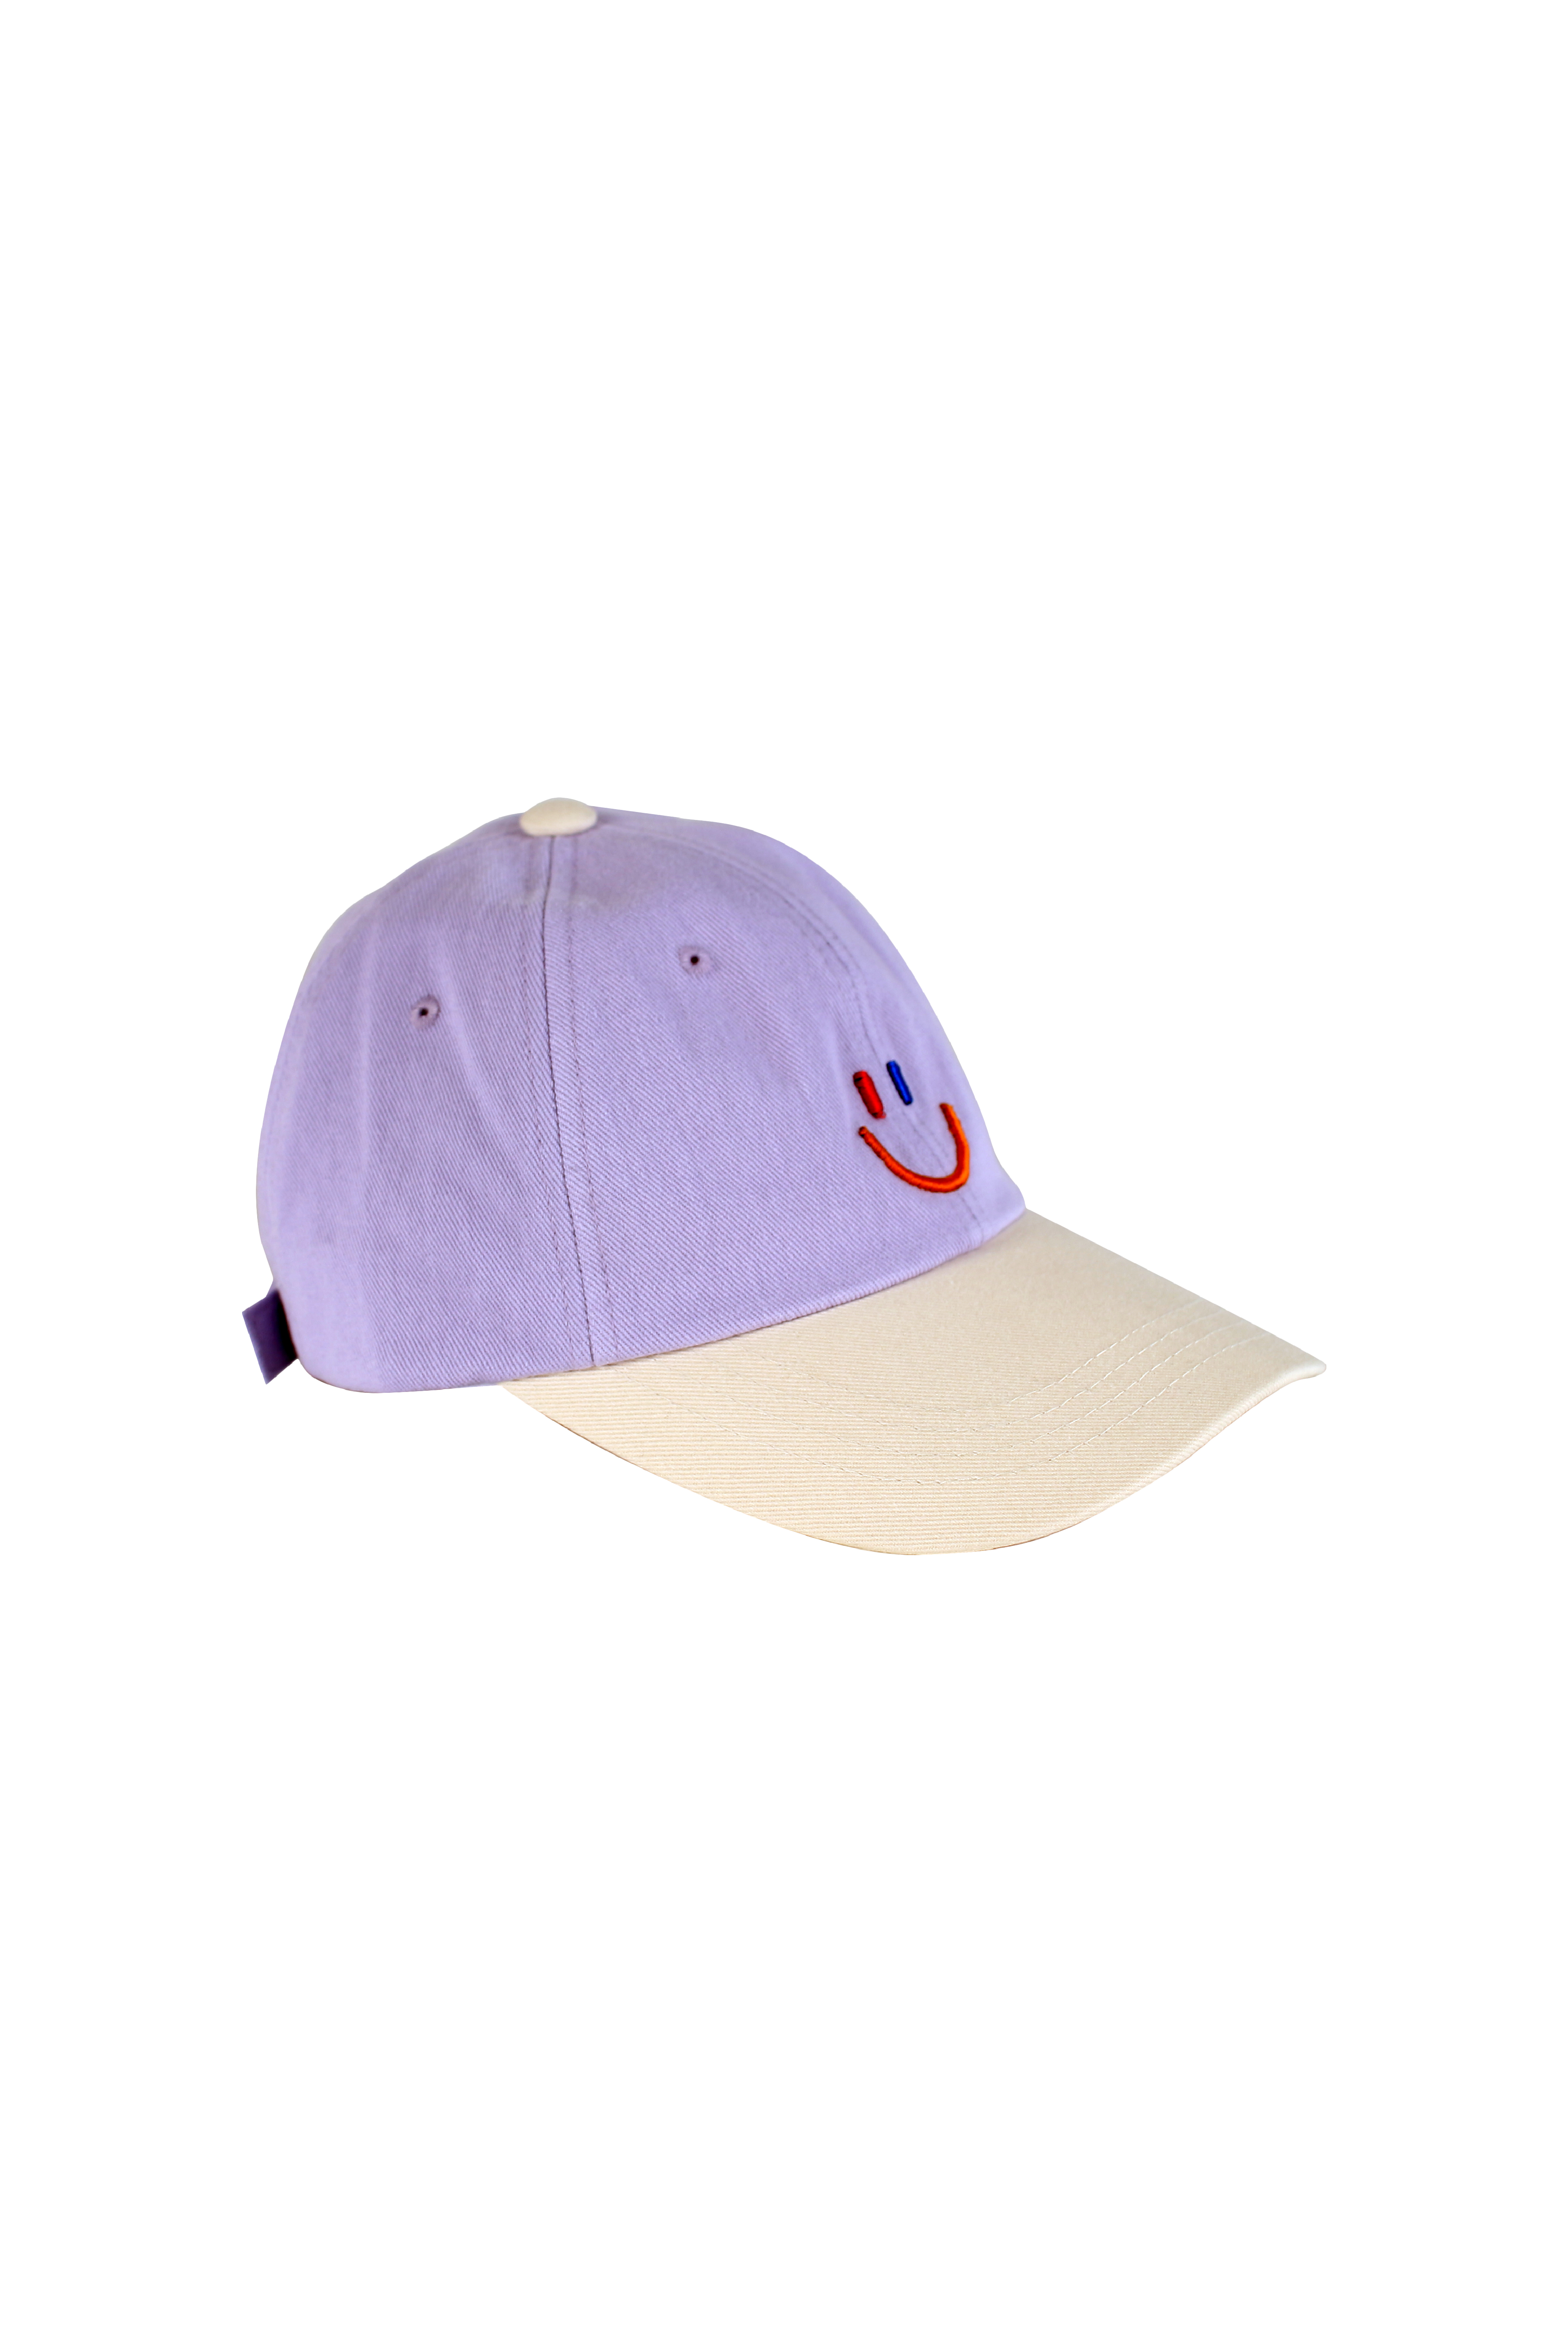 LaLa Ball Cap [Purple]